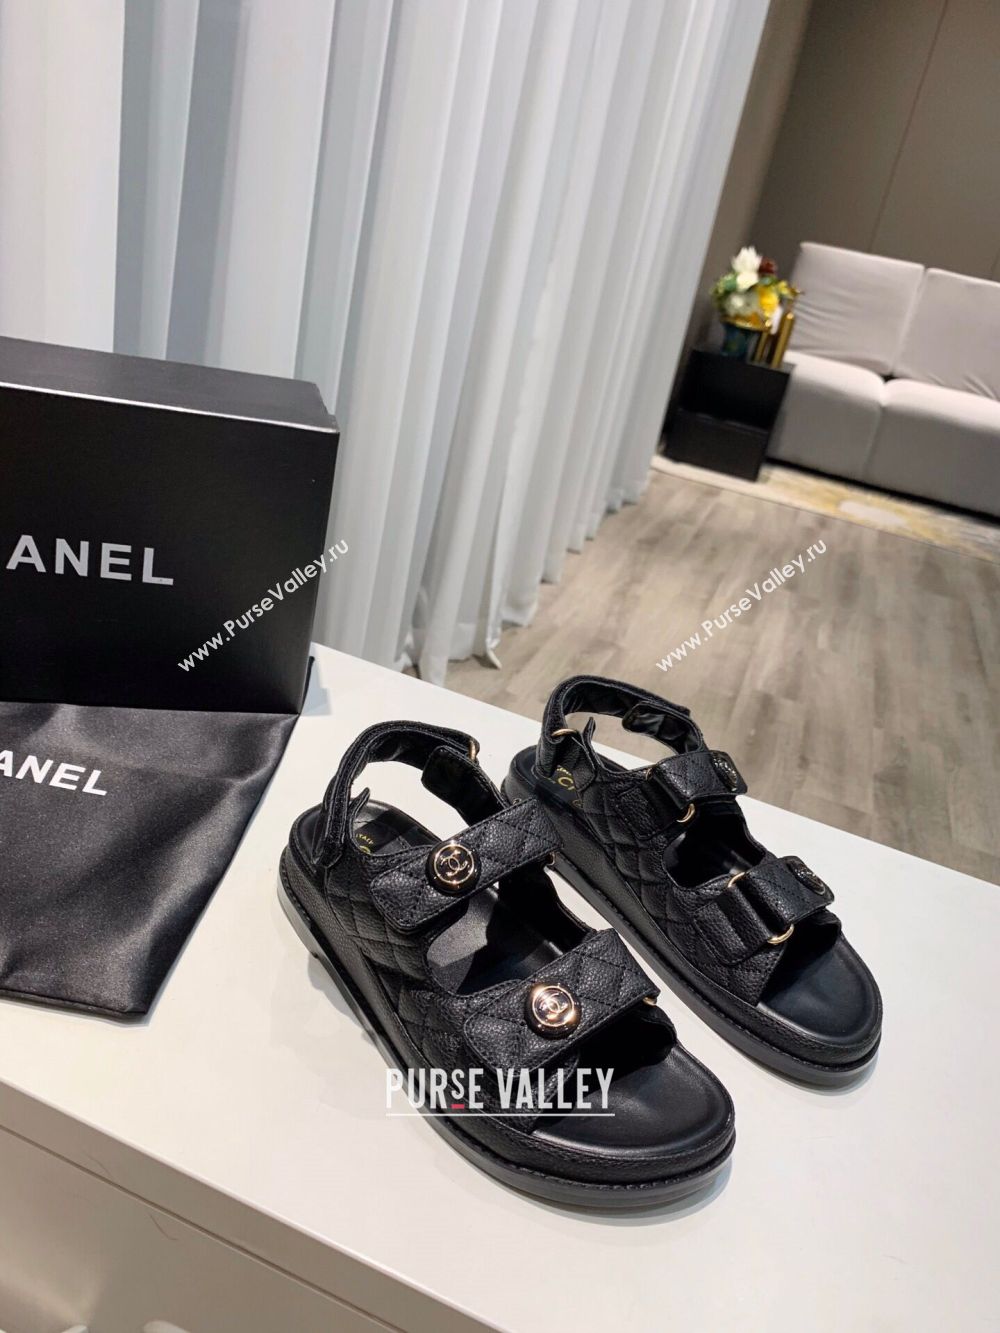 Chanel Sandals 2605